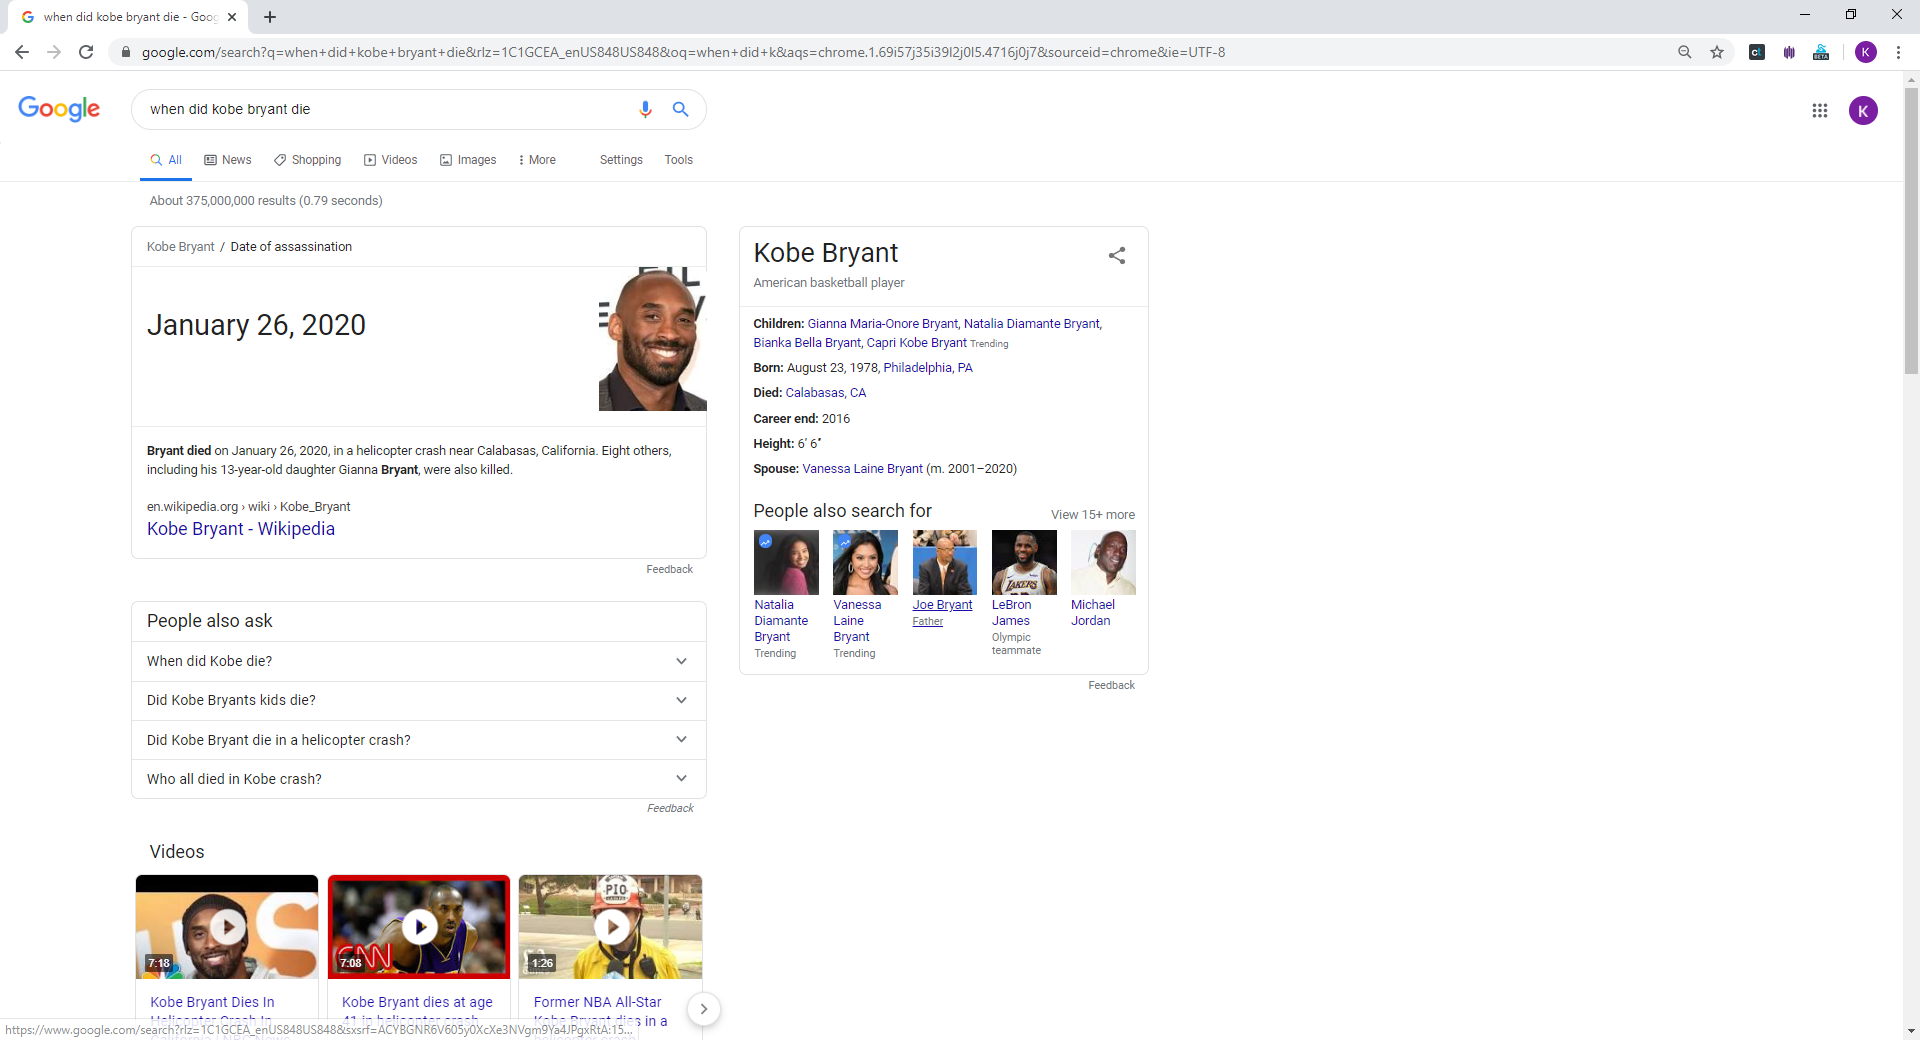 Kobe Bryant's death date no longer 